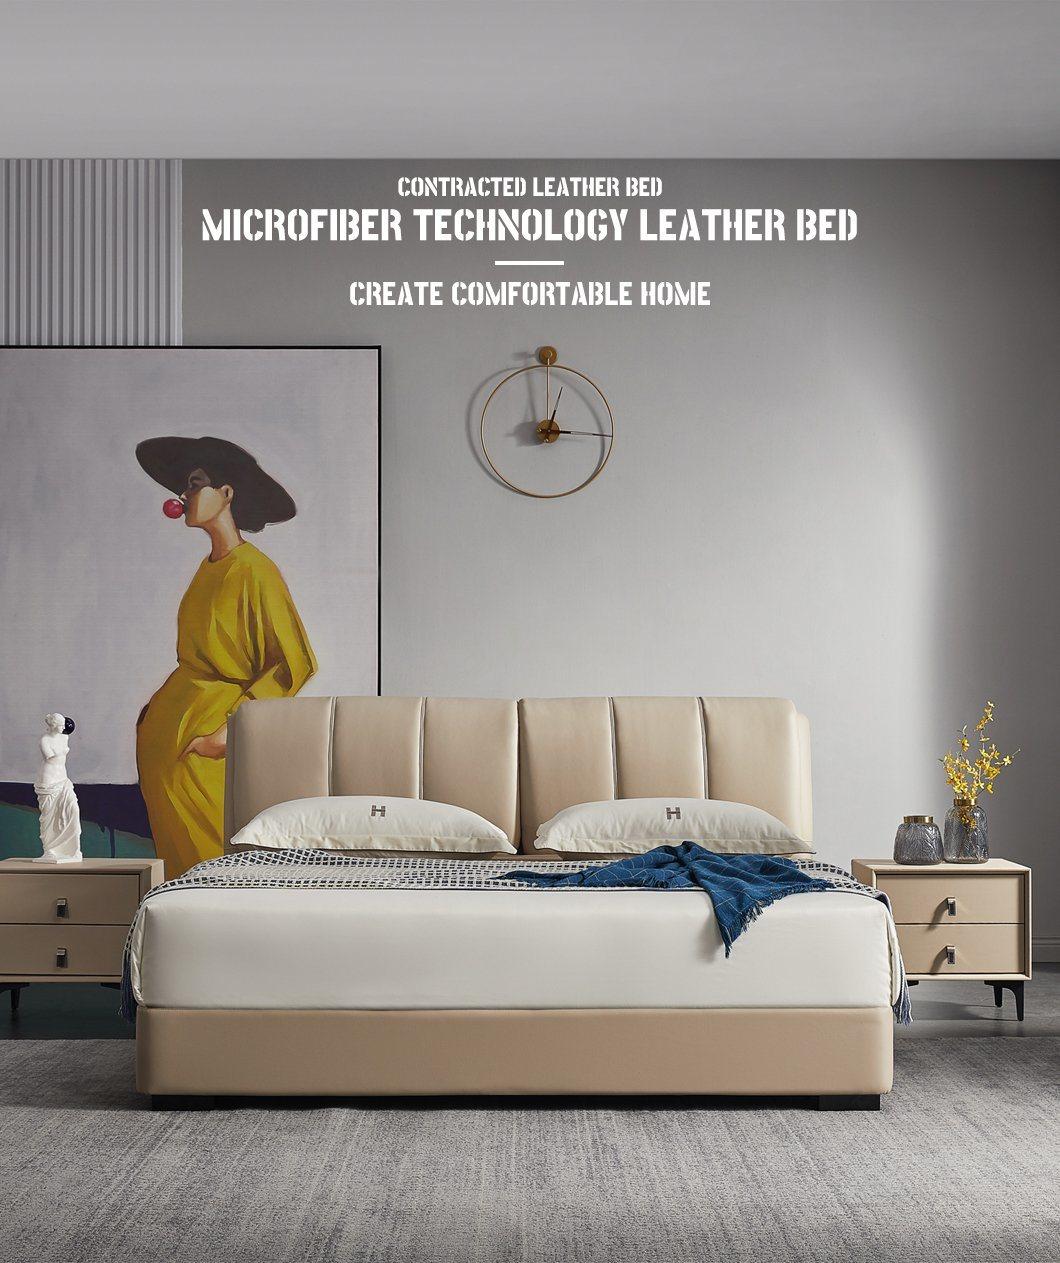 2021 Hot Sale Microfiber Technology Leather Bedroom Bed